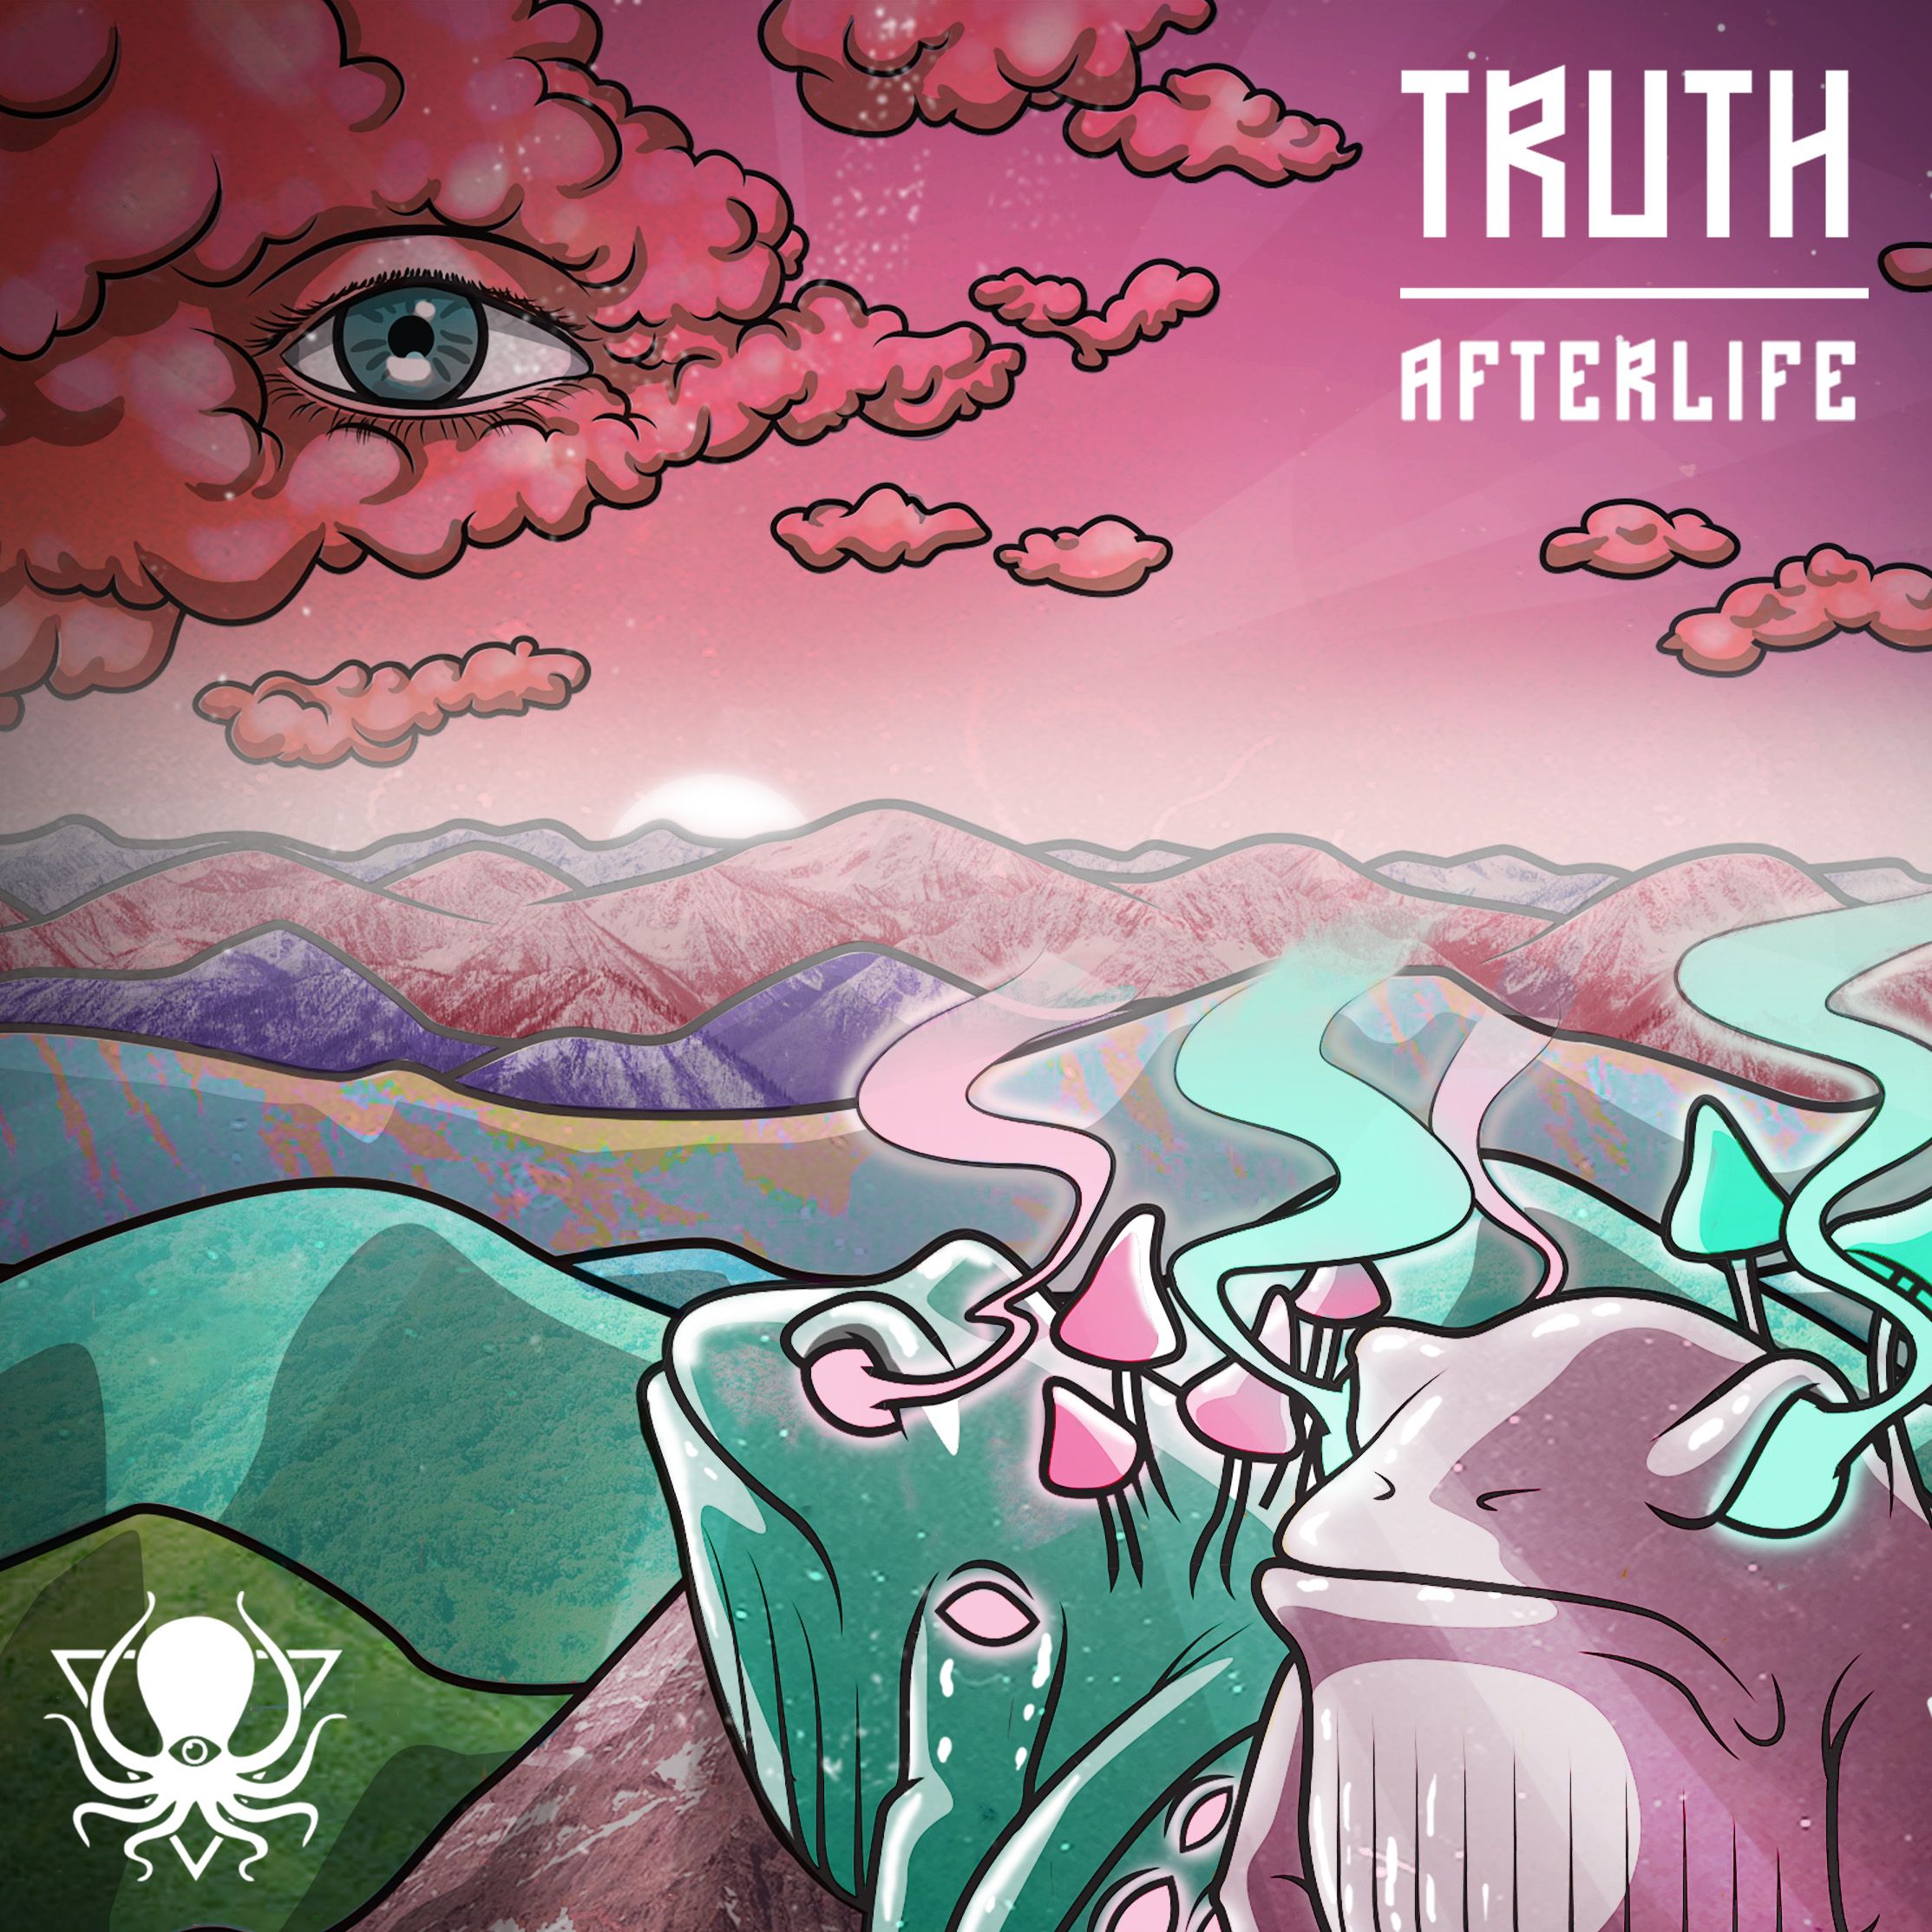 Download Truth - Afterlife (DDD095)